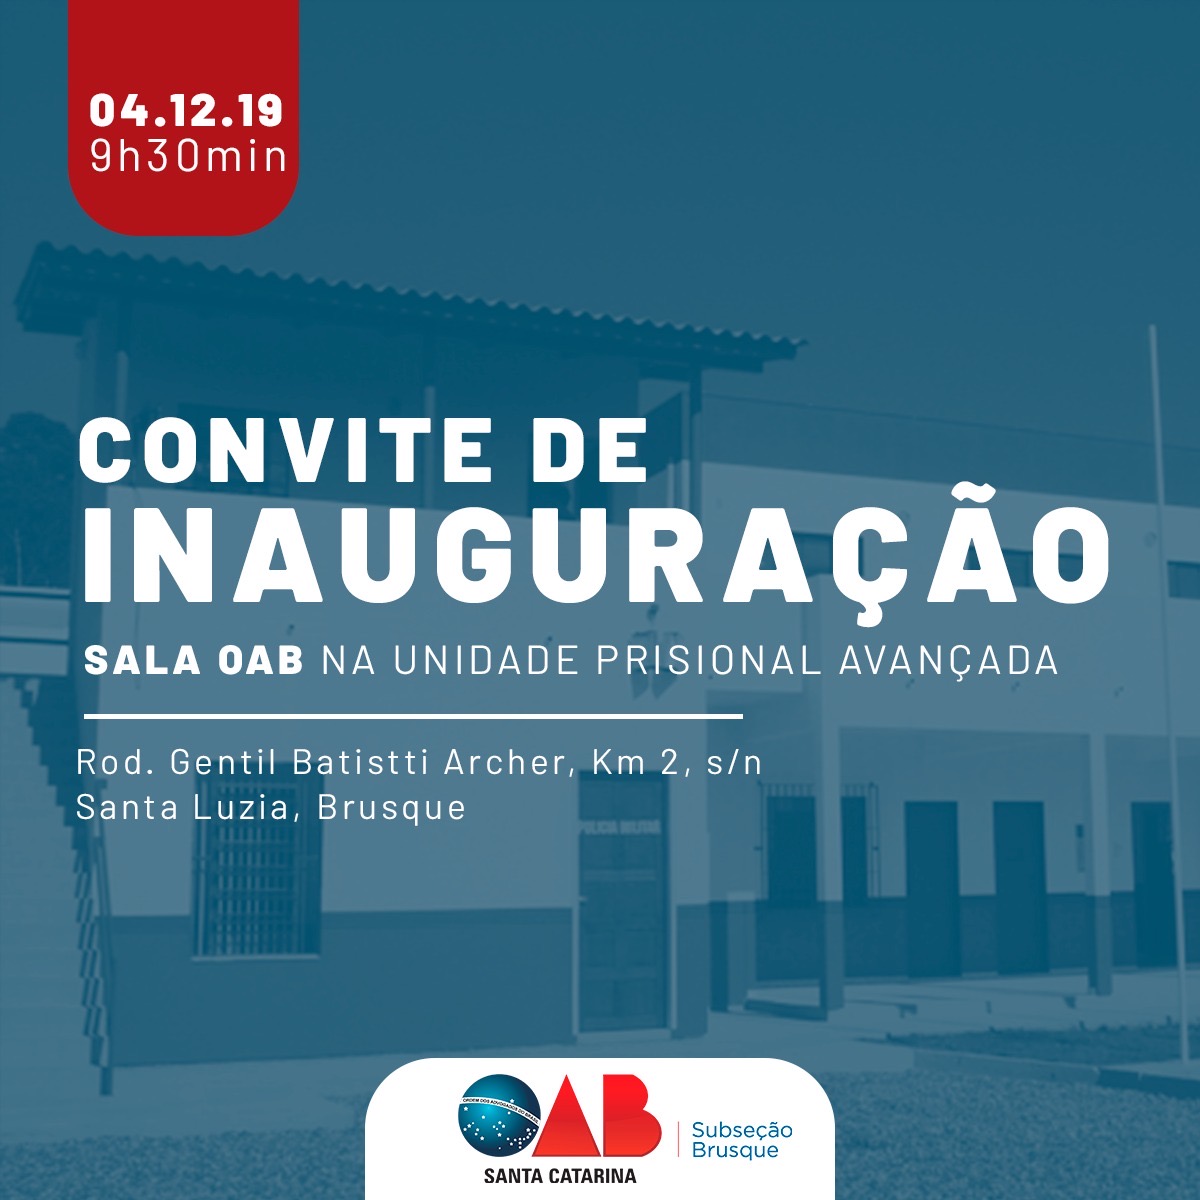 OAB Brusque inaugura sala na Unidade Prisional Avançada